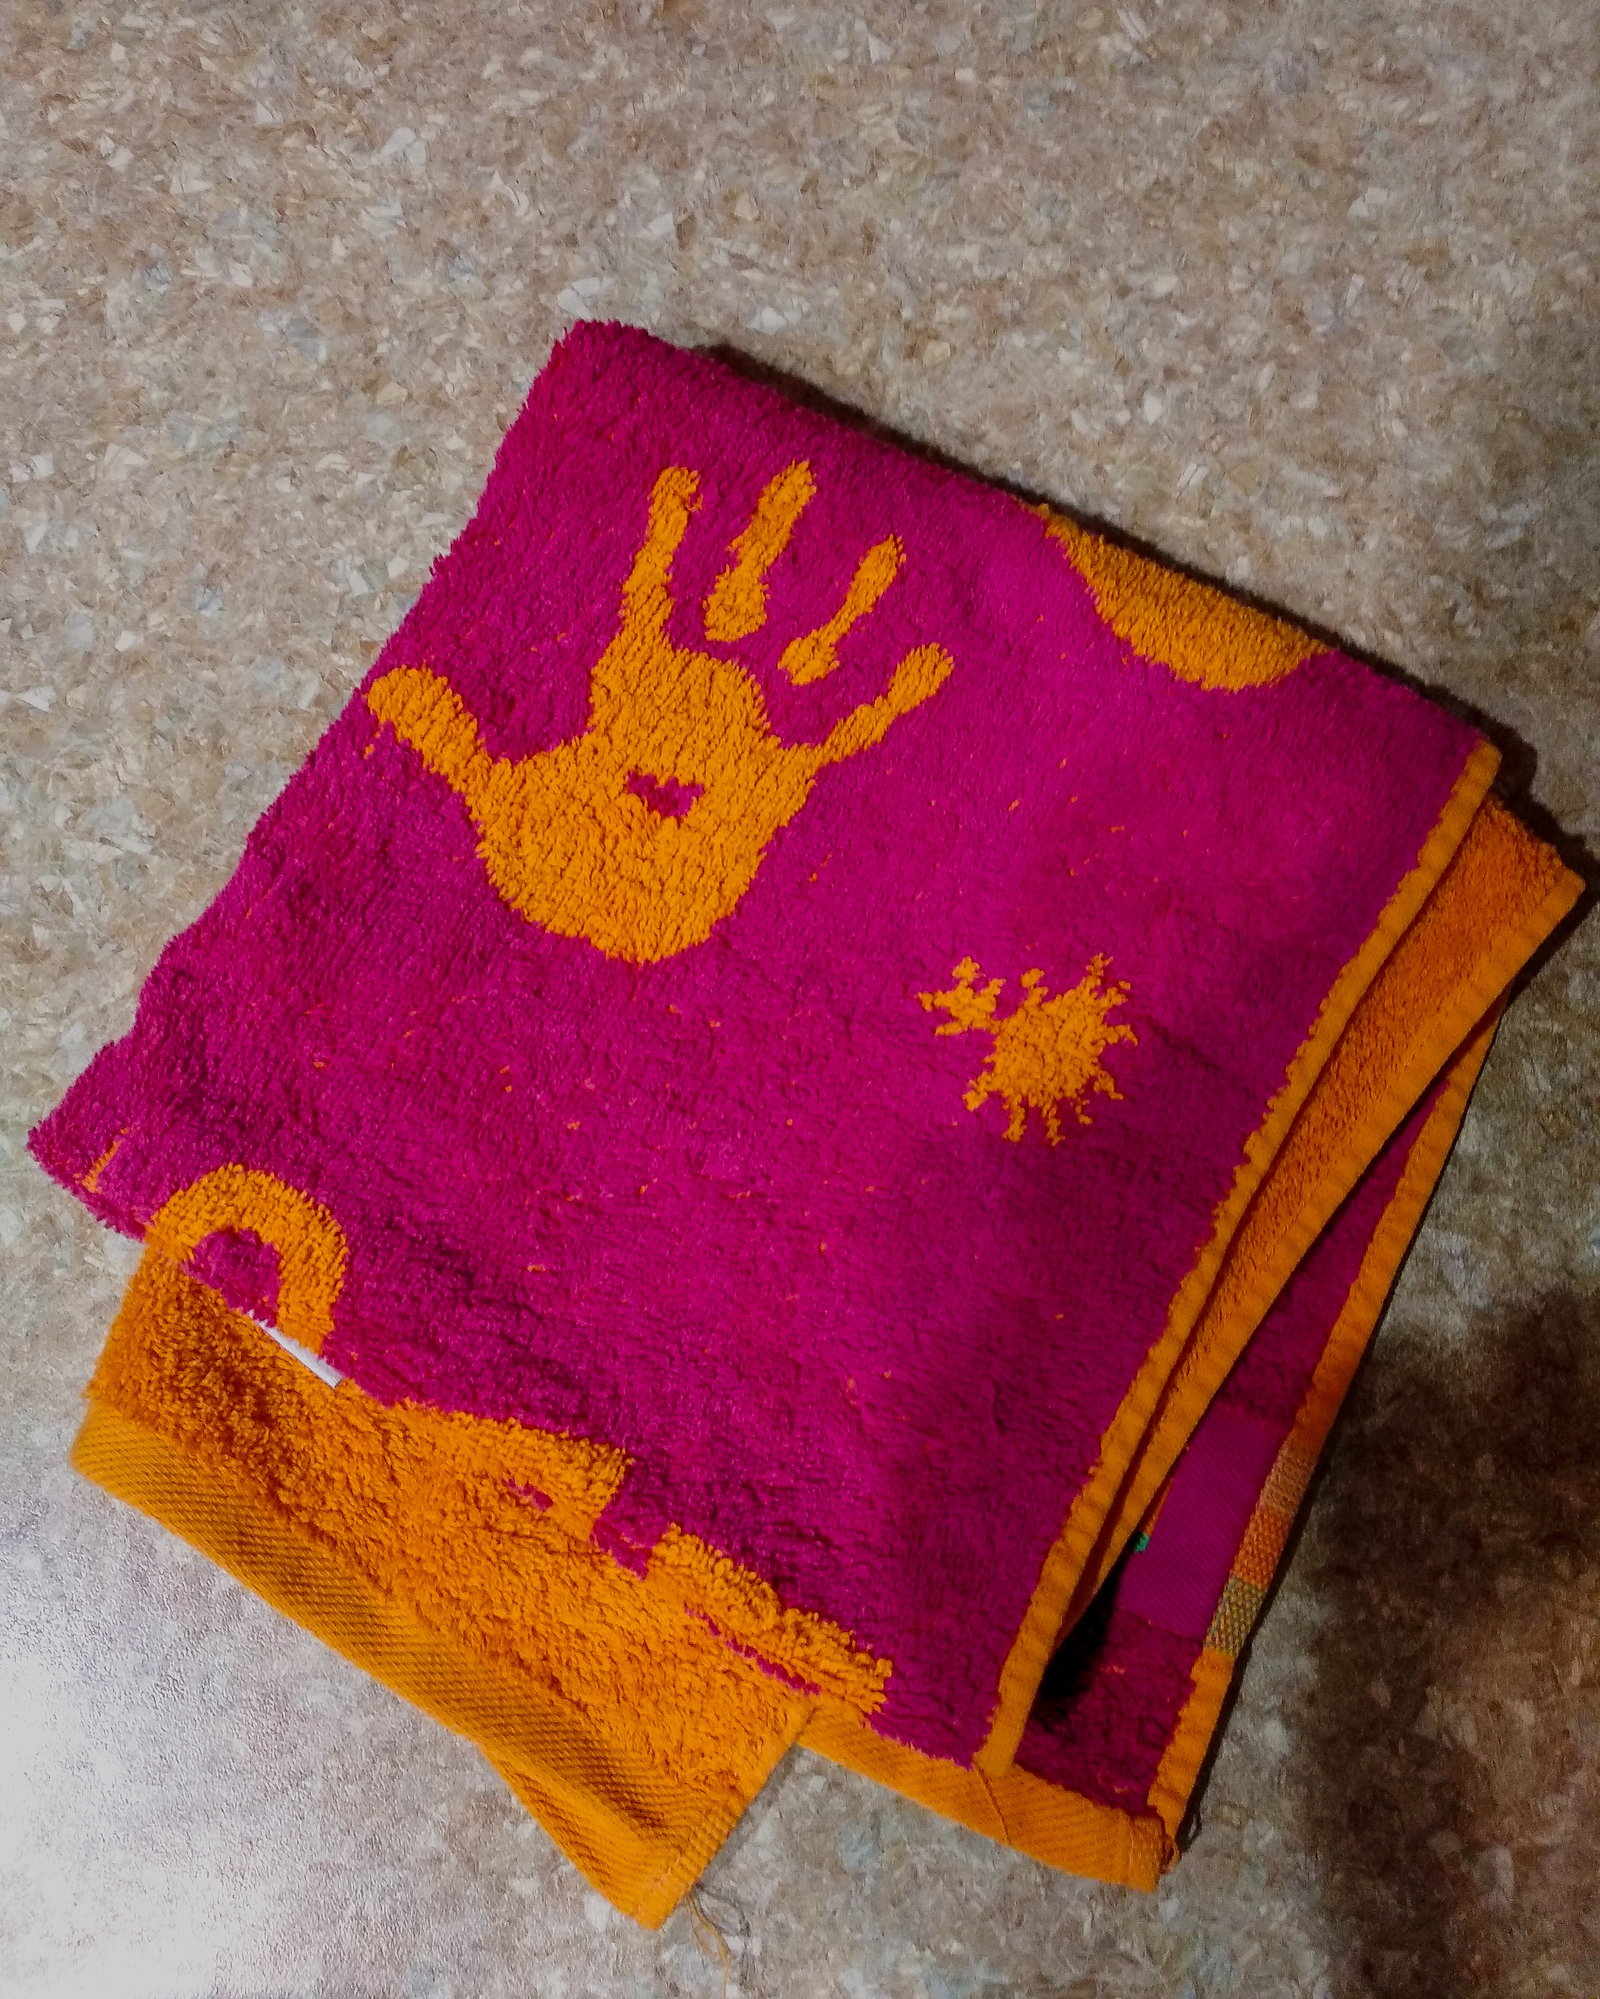 Grandma sent me a towel... - My, The Elder Scrolls V: Skyrim, Oblivion, Games, The Dark Brotherhood